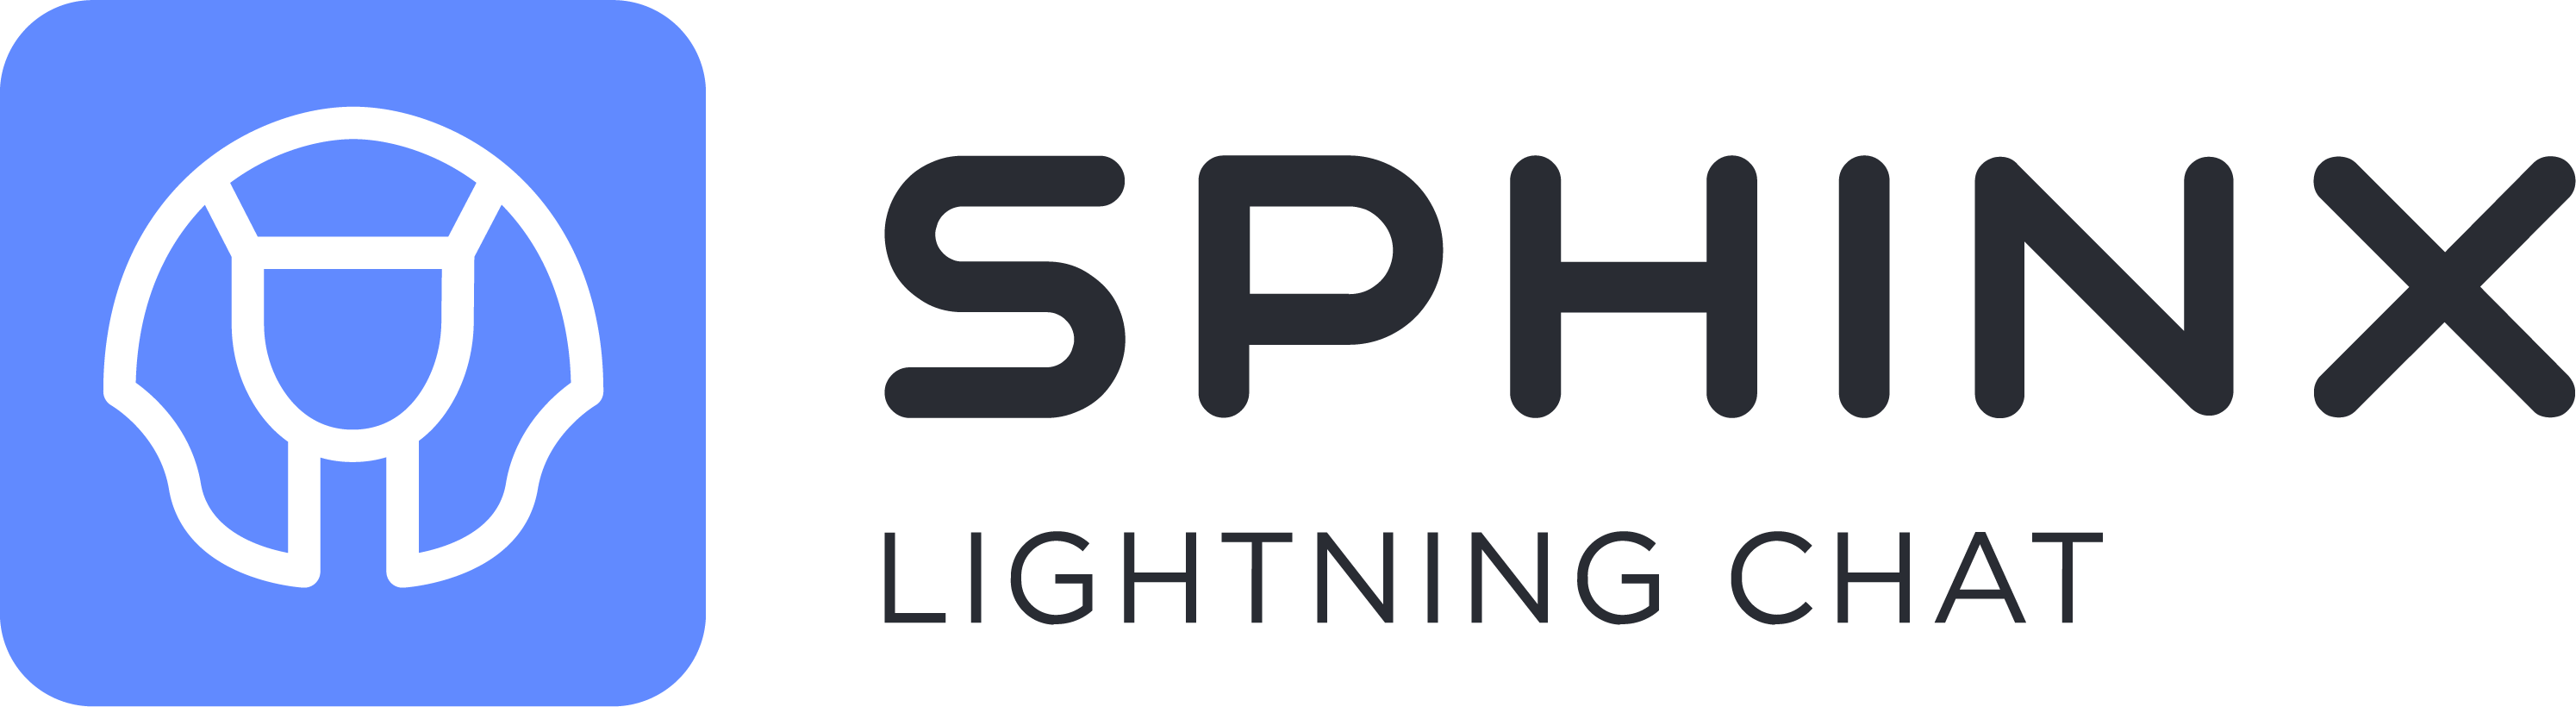 Sphinx app logo